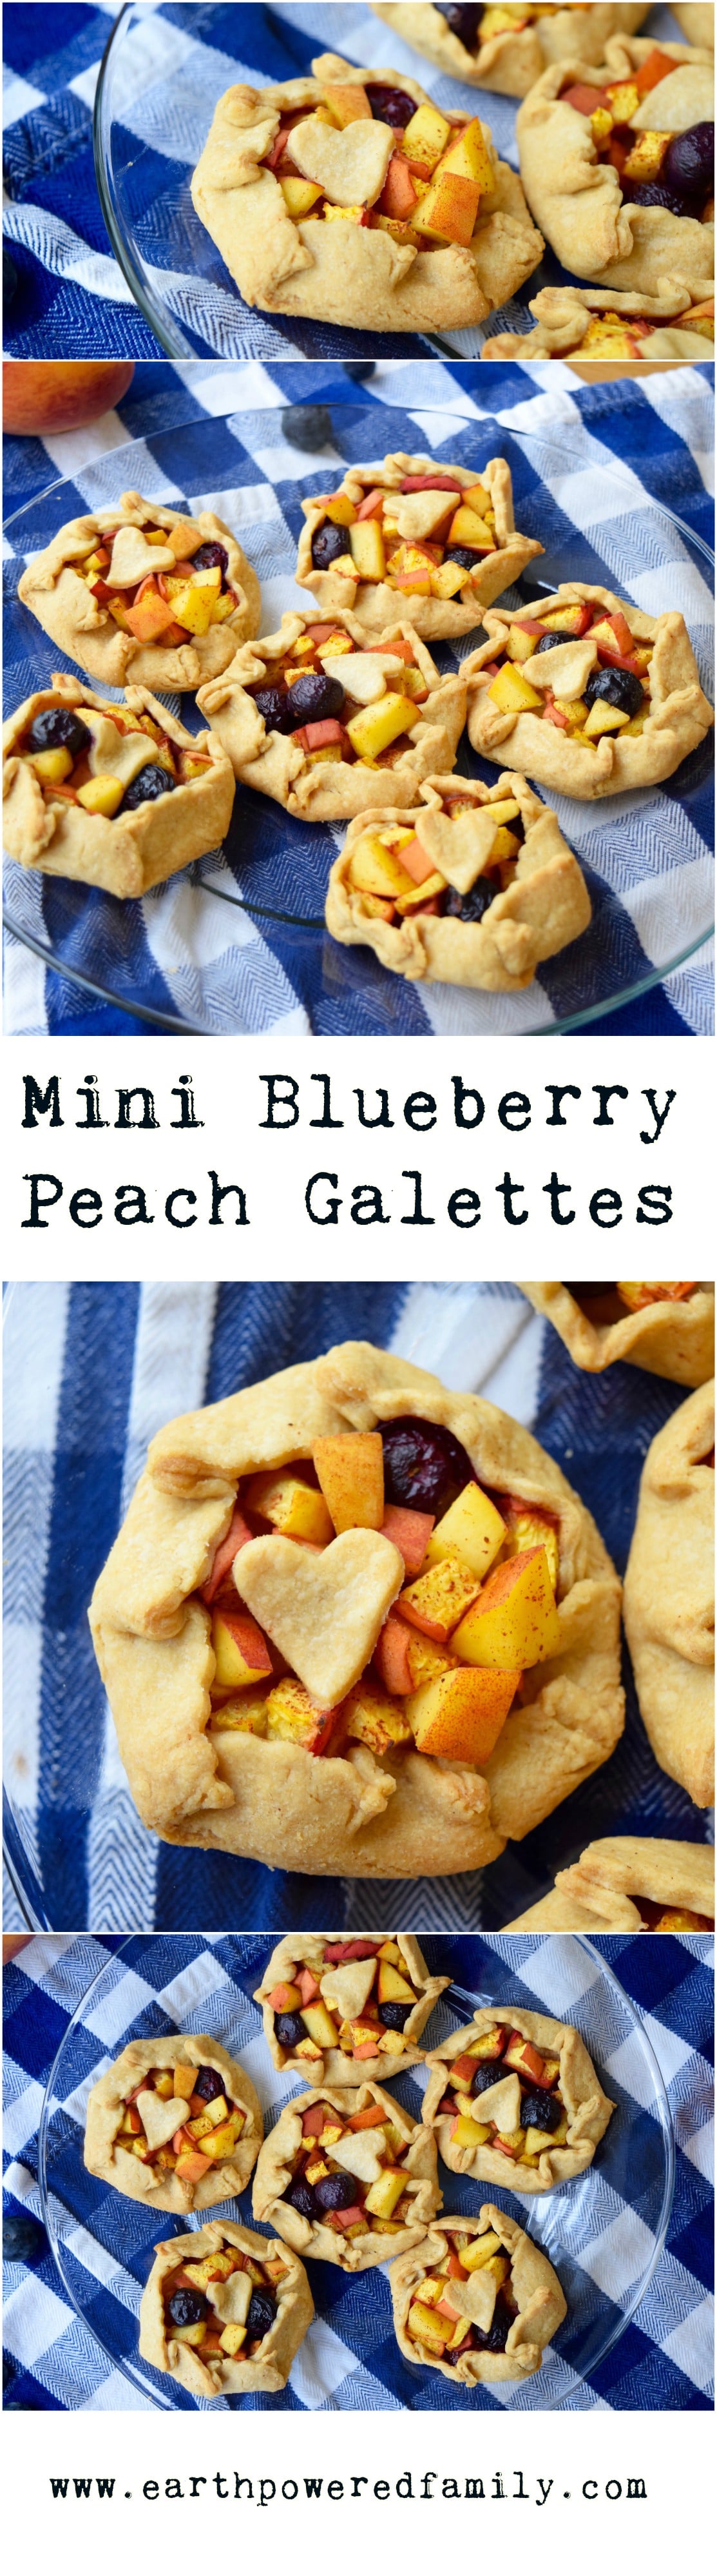 Mini Blueberry Peach Galettes